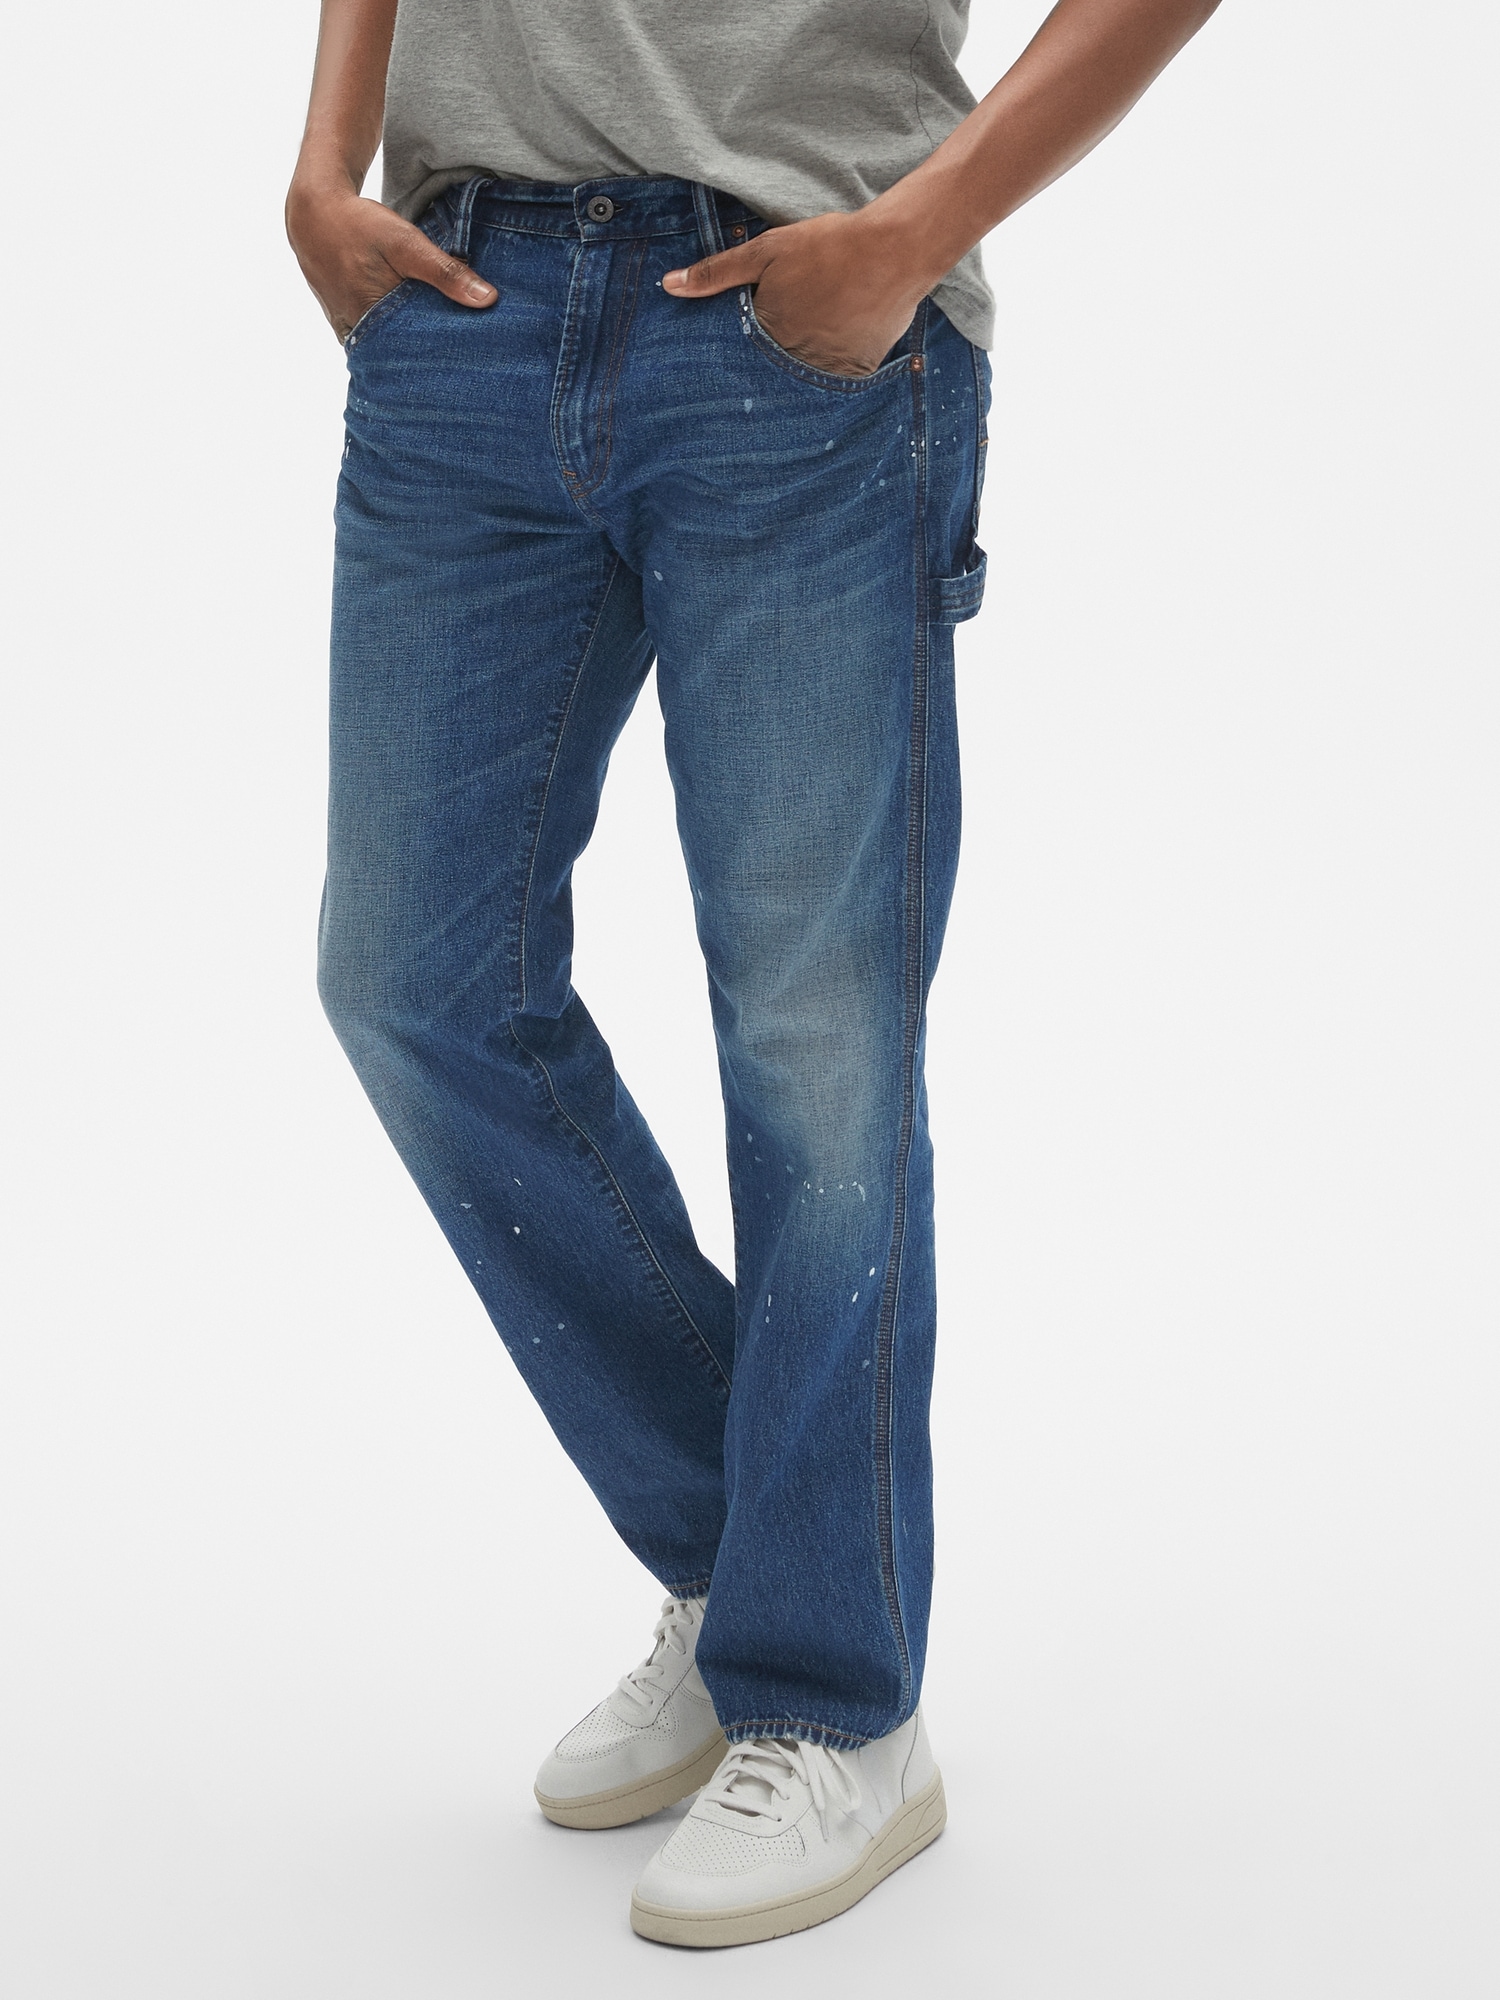 mens jeans 80s